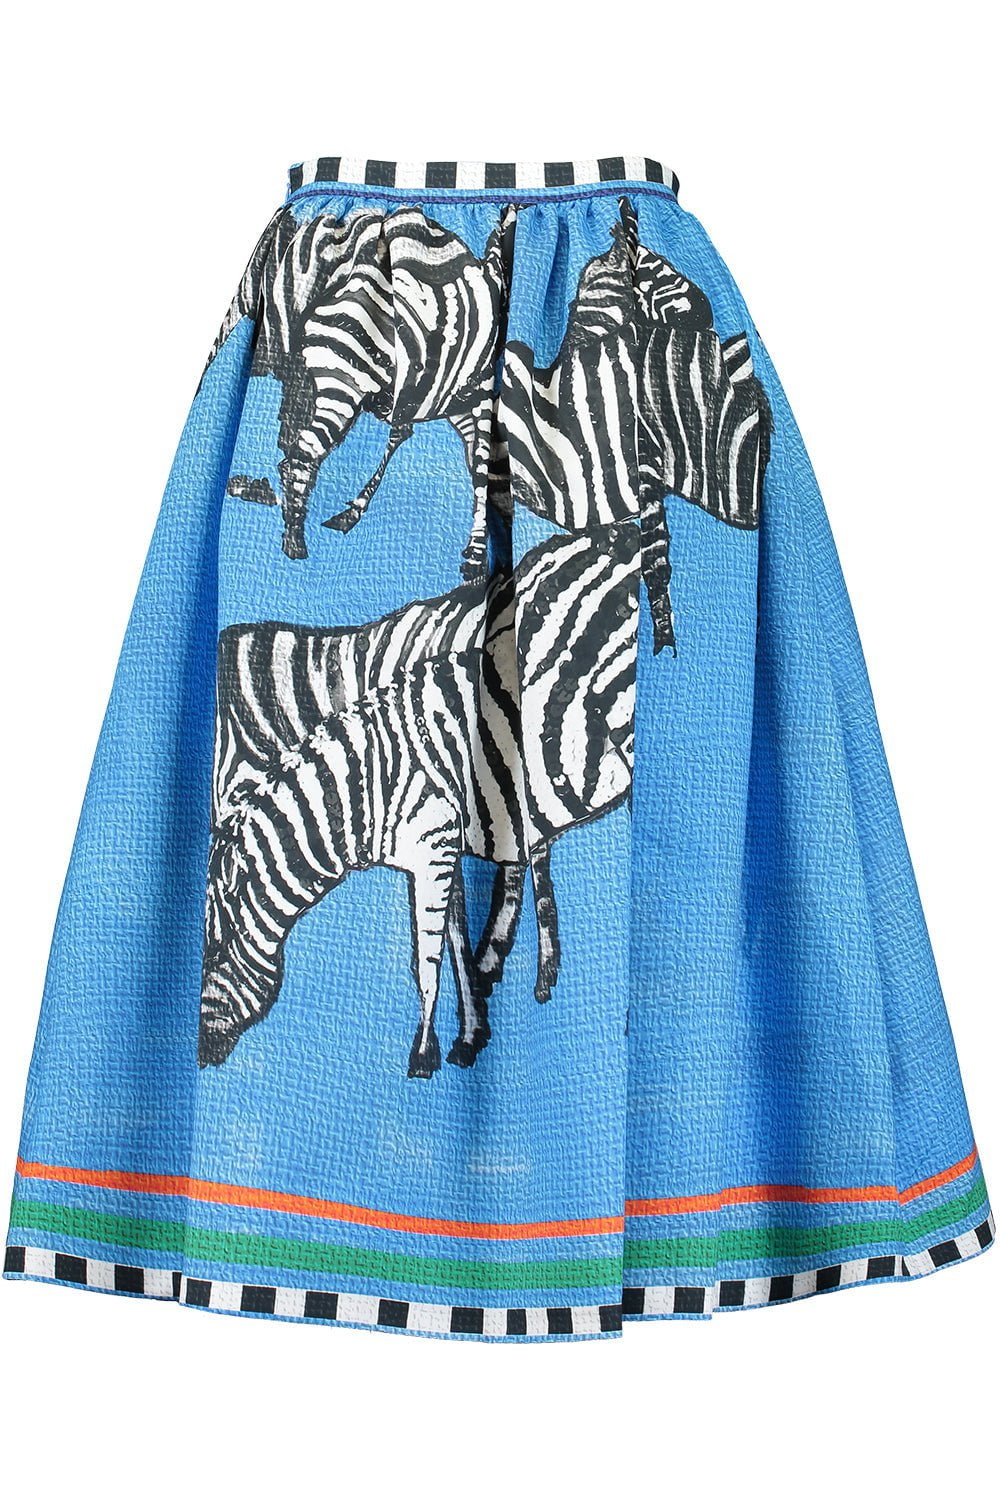 STELLA JEAN-Zebra Skirt-